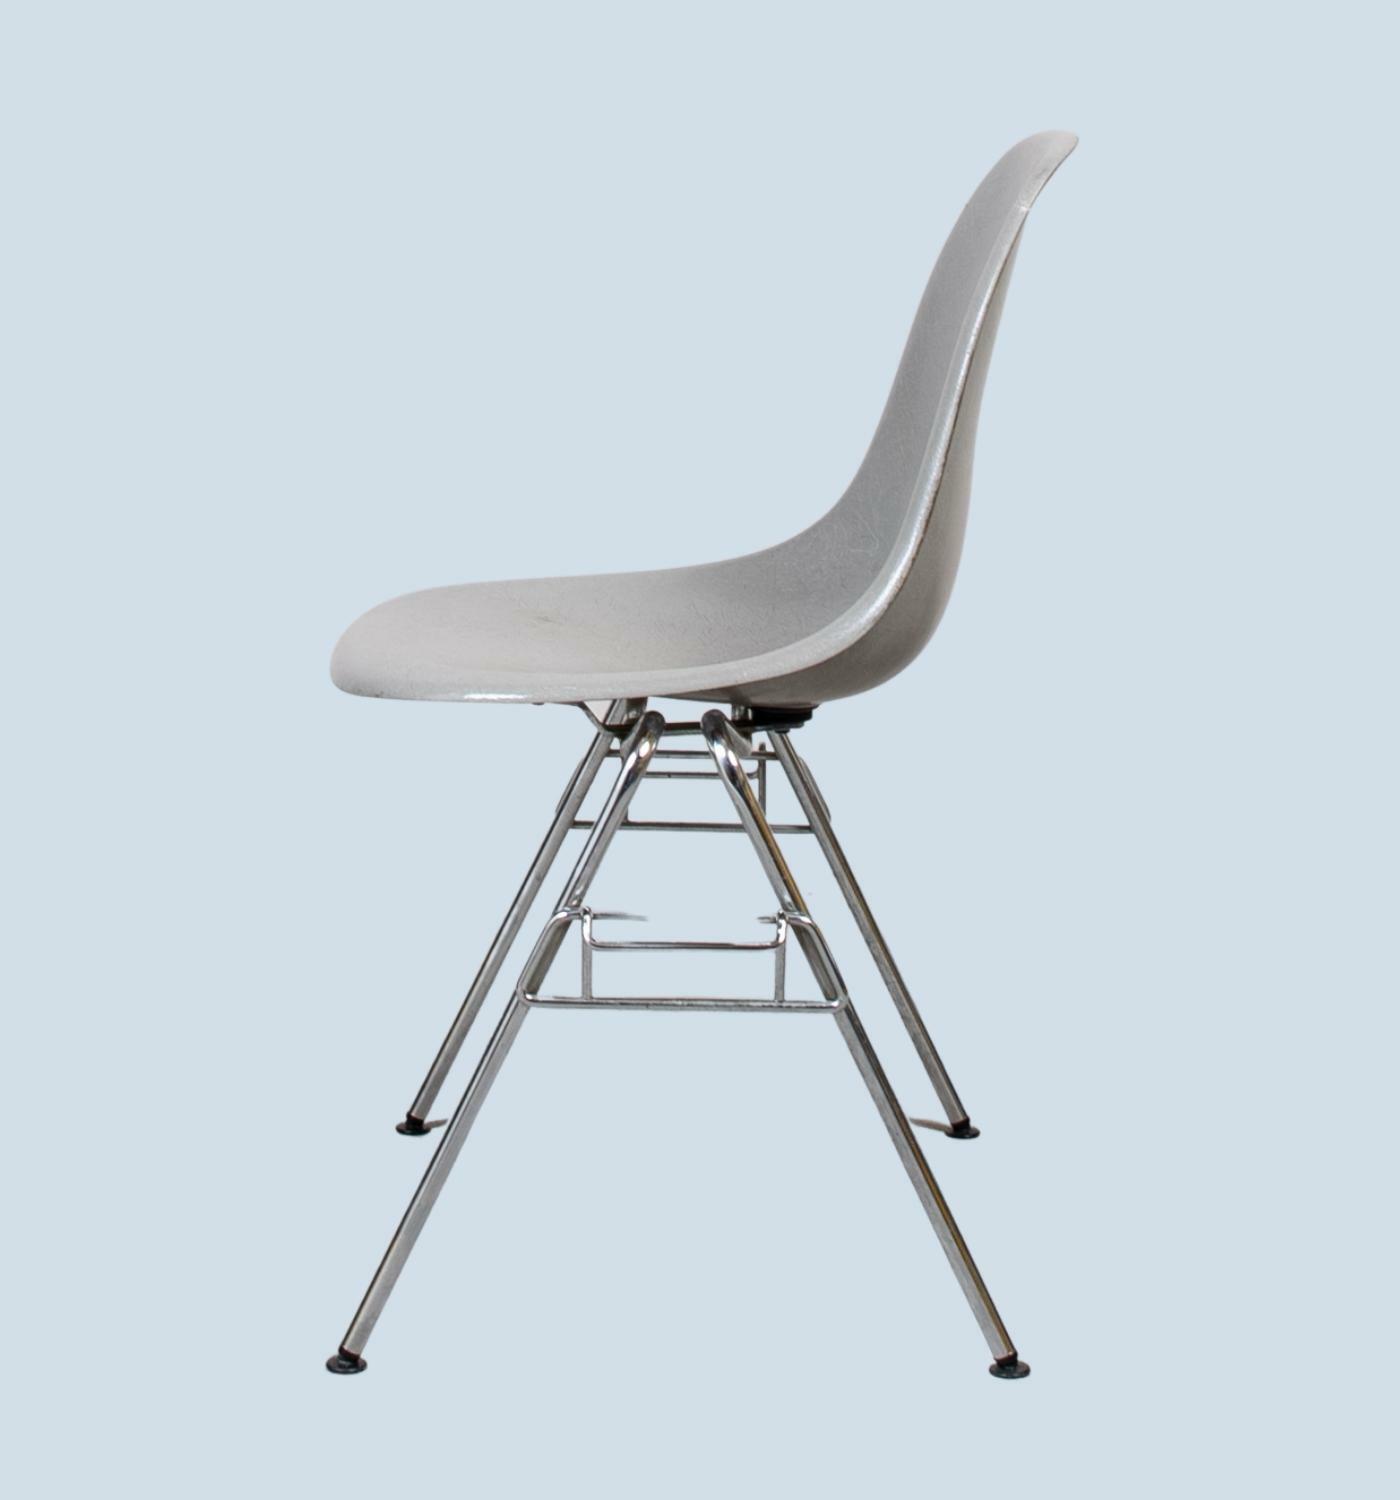 Eames Fiberglass Side Chair by Herman Miller Light Grey 2